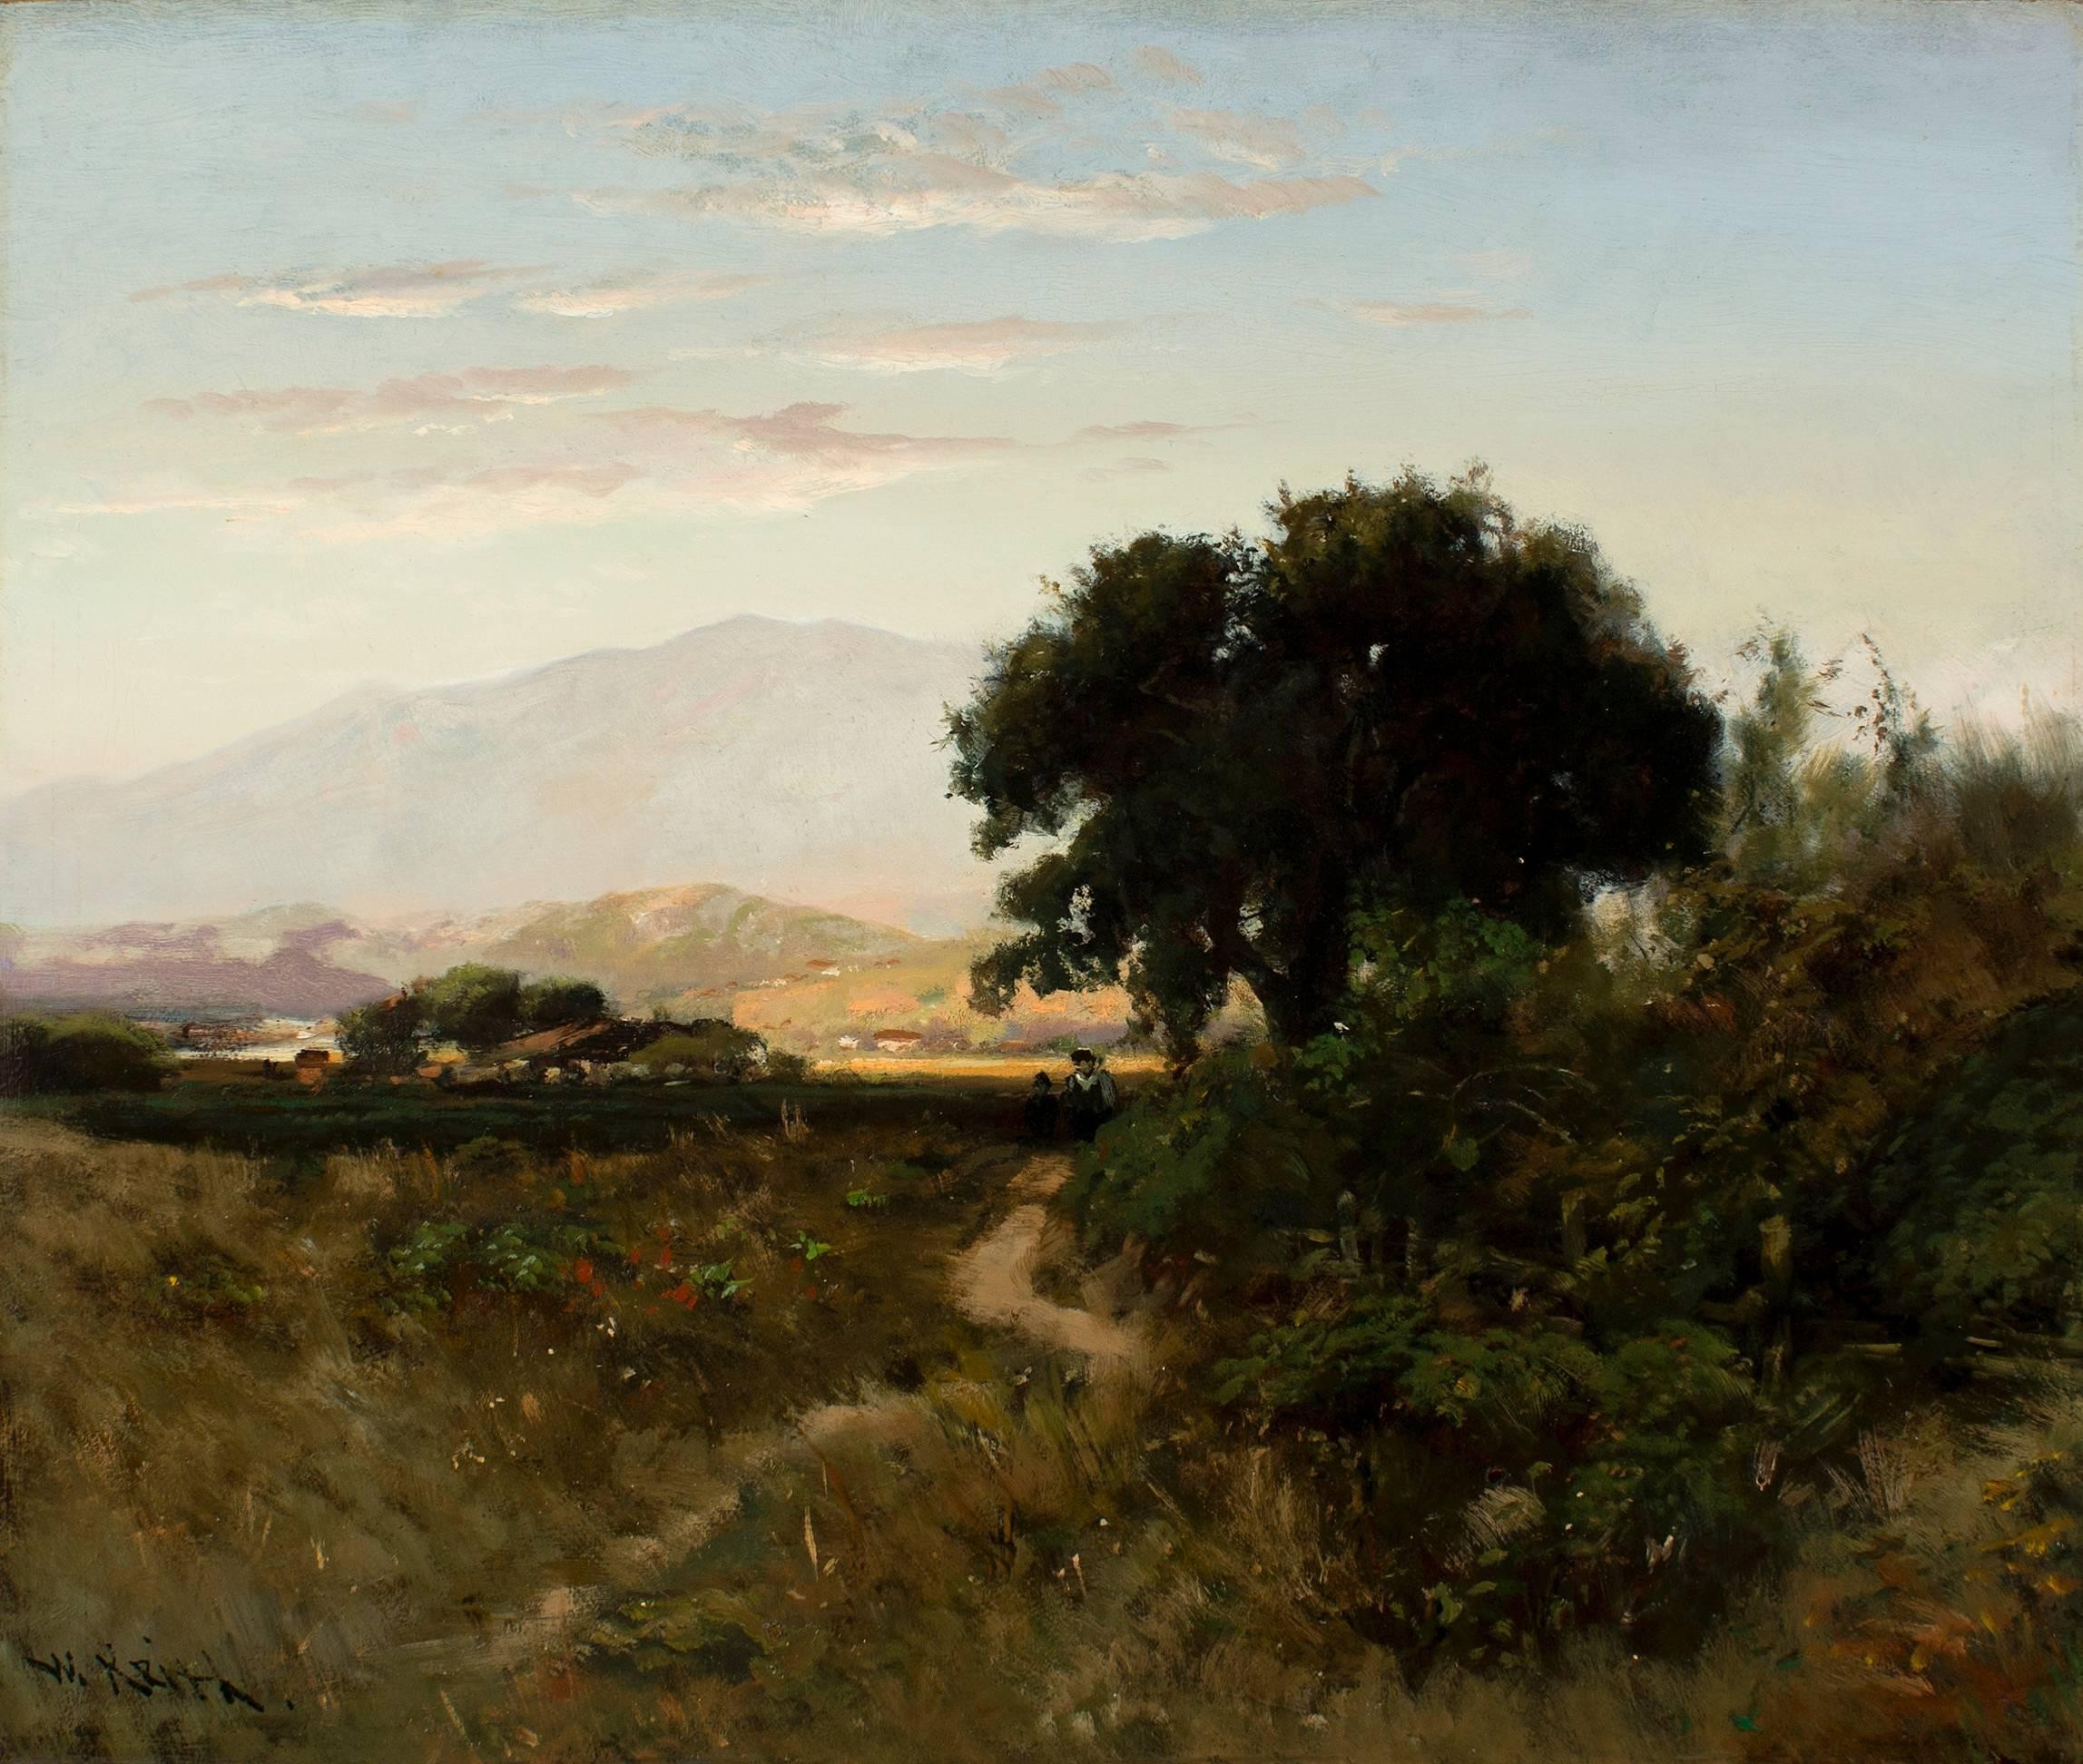 Mount Tamalpais, Marin County, California, - Painting by William Keith